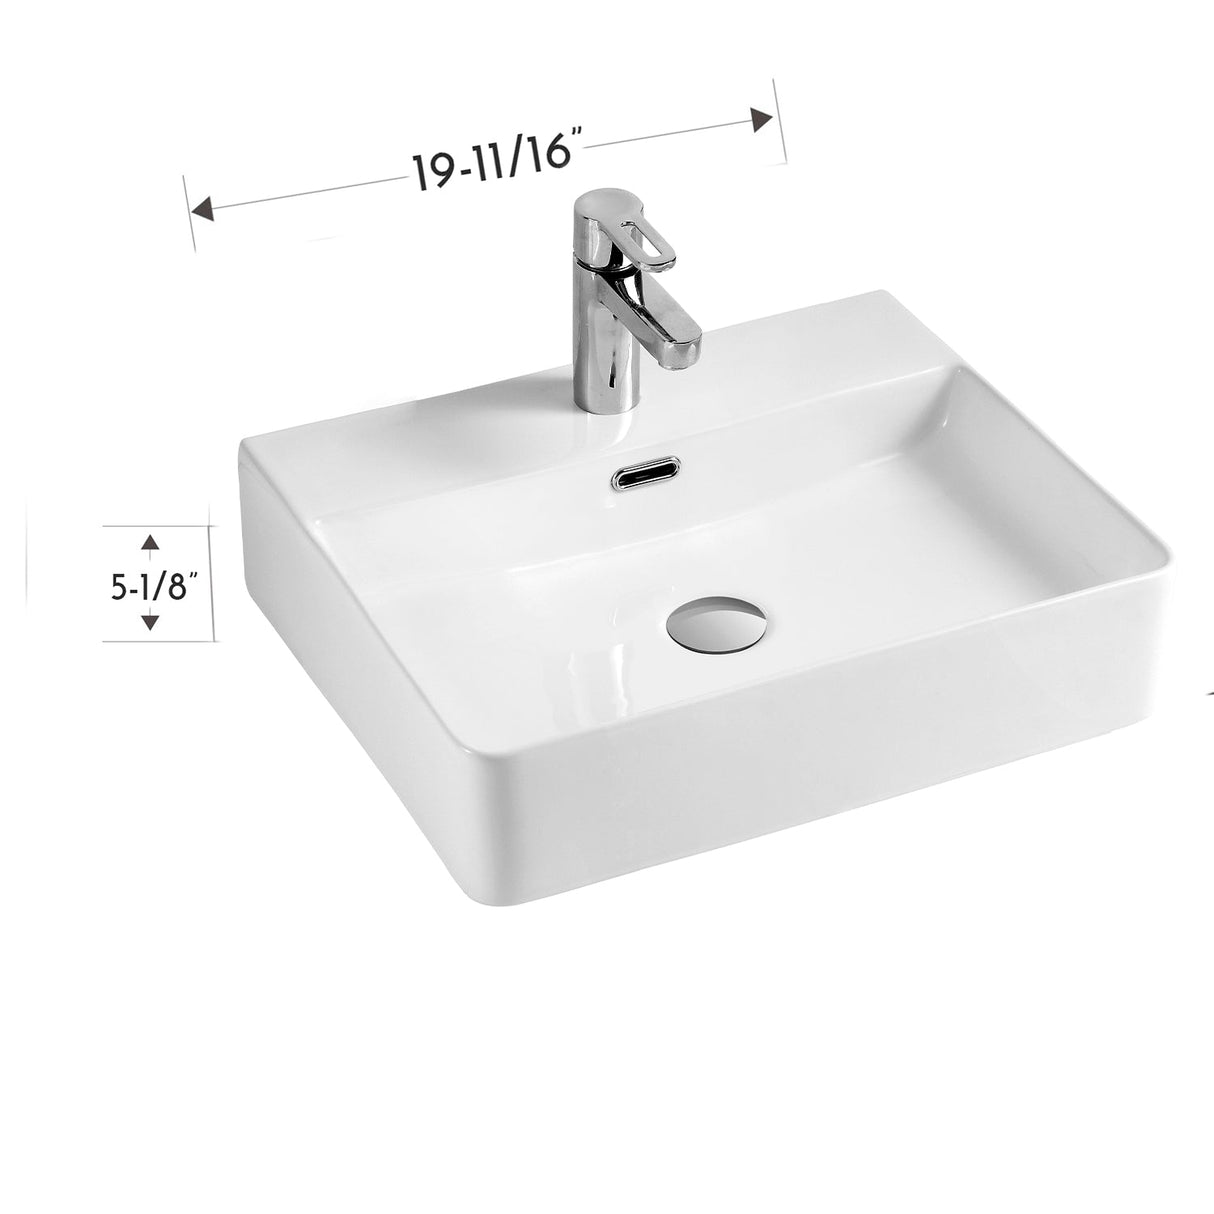 DAX Ceramic Rectangular Bathroom Vessel Basin, 20", Black Matte DAX-CL1275-BM